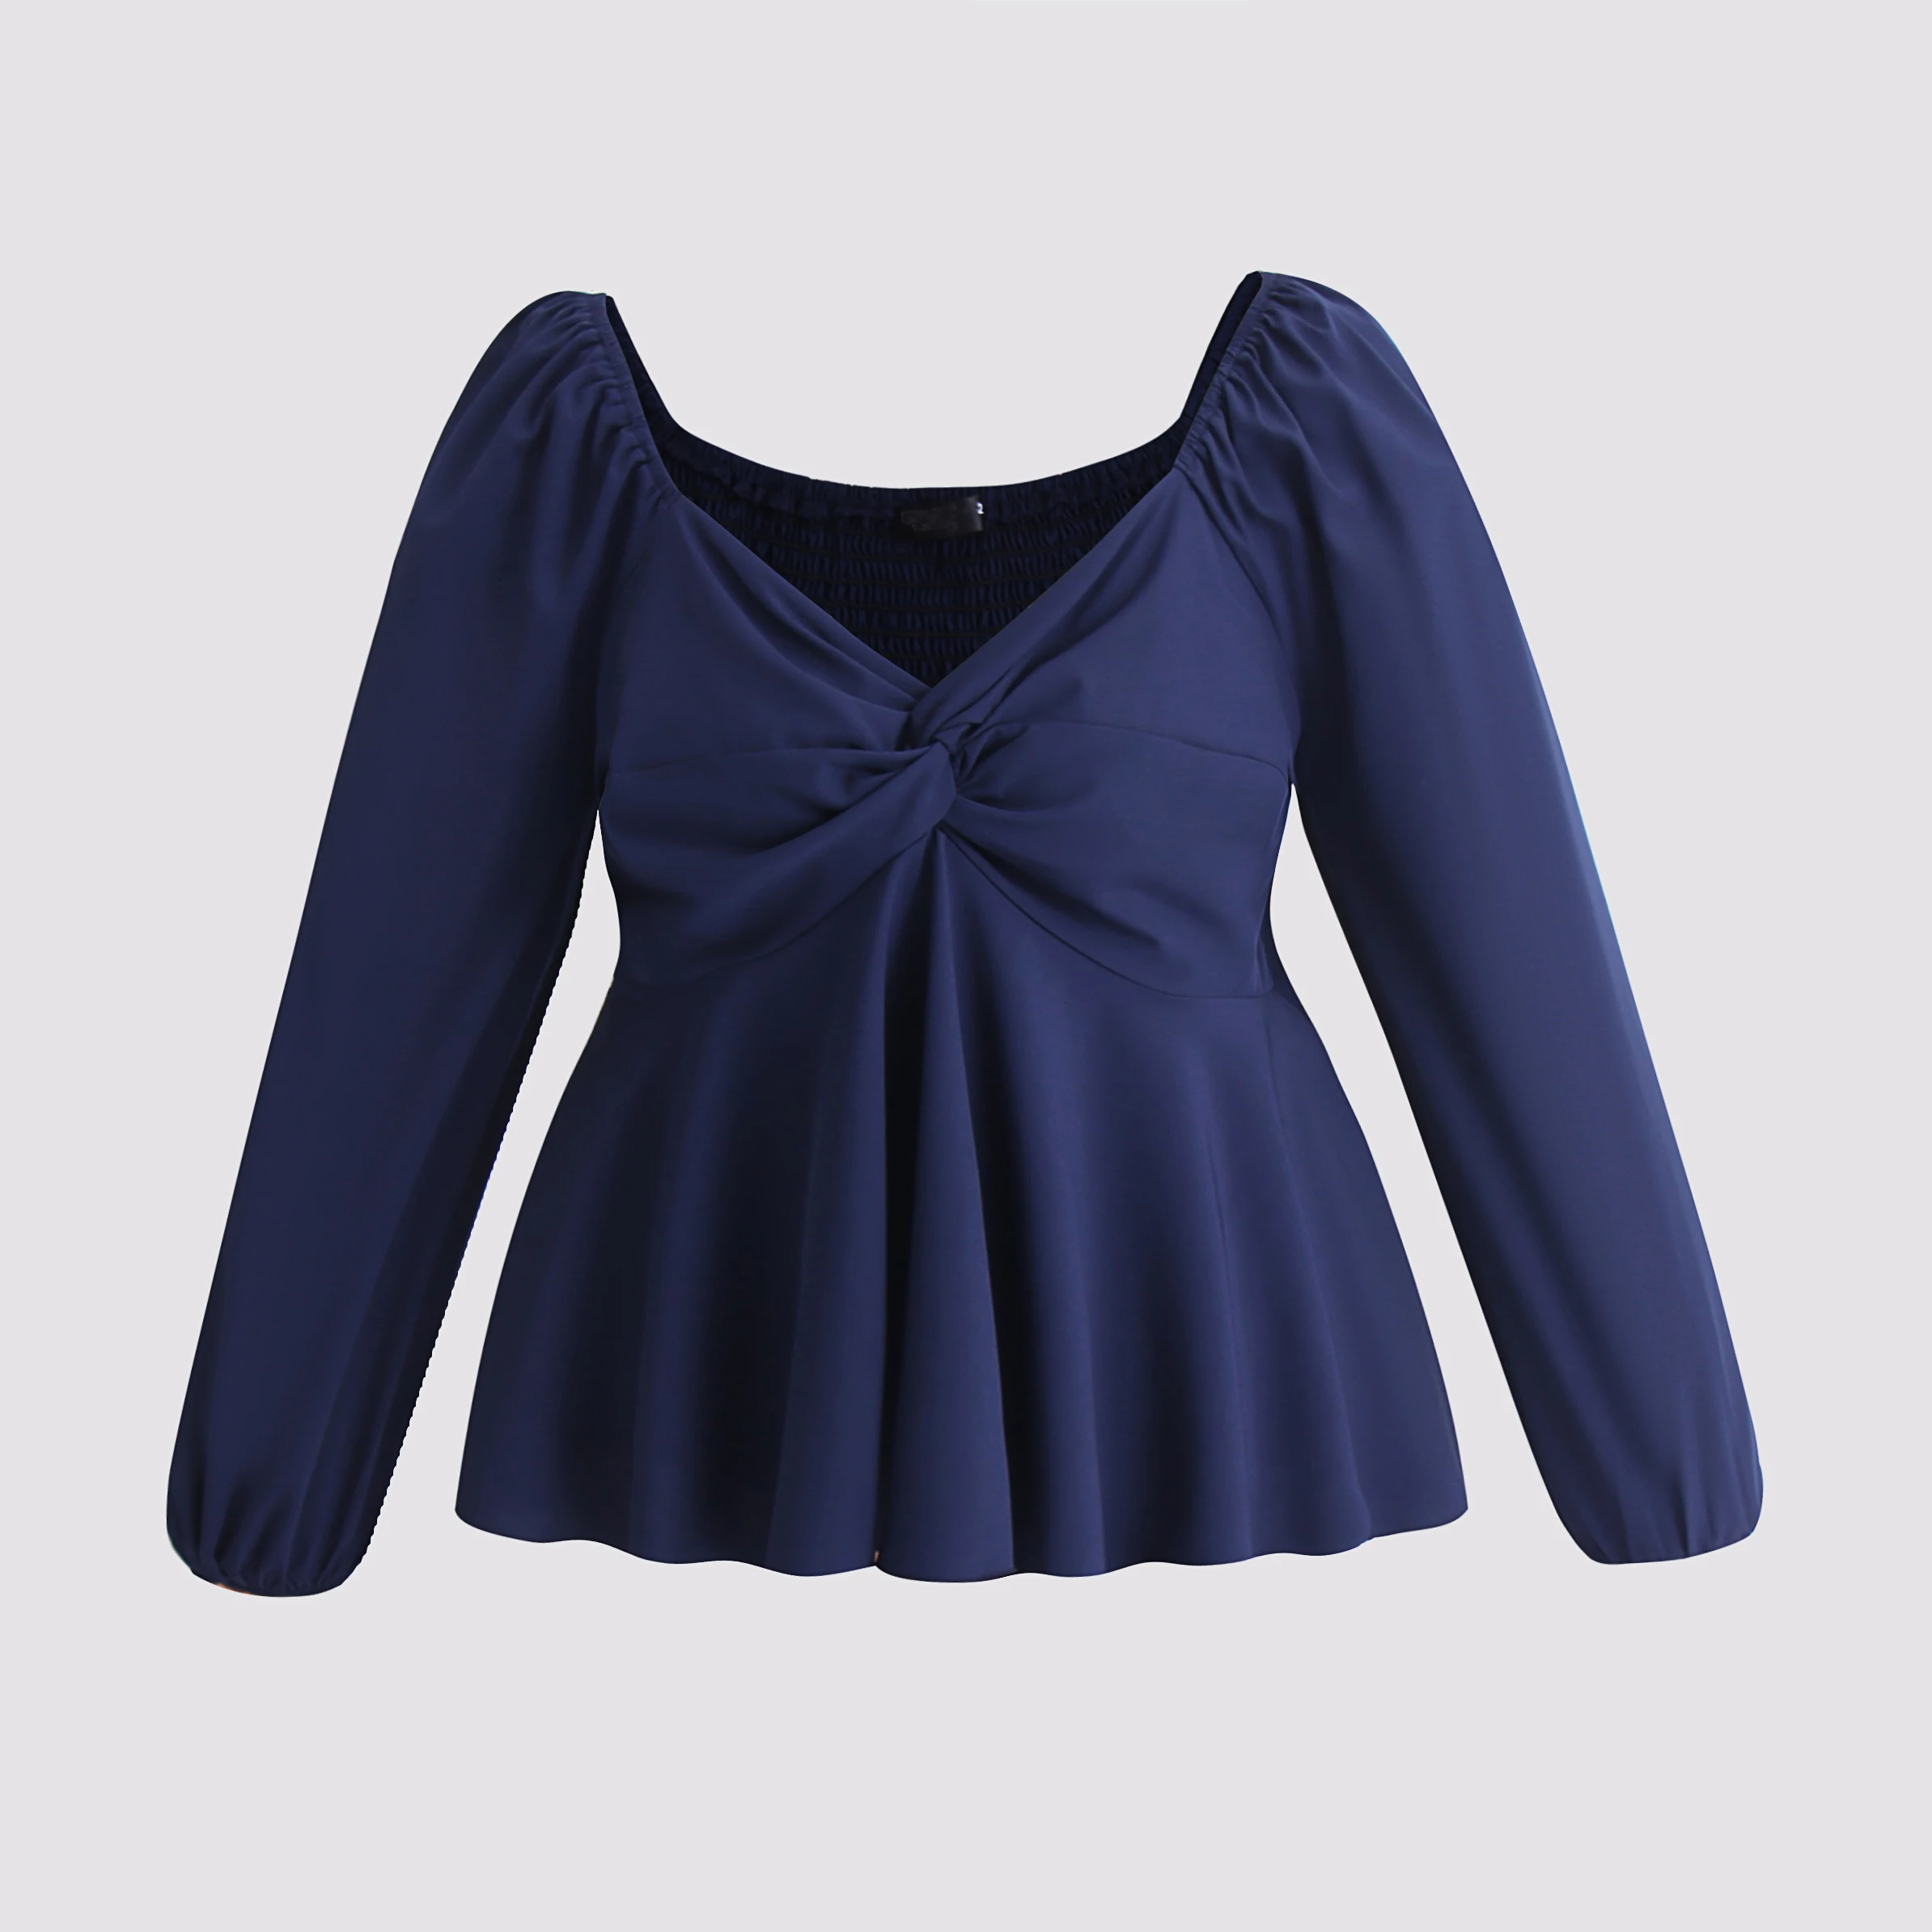 Plus Size 4XL Woman Peplum Blouse Summer 2022 Fashion Elegant Blue Long Sleeve Oversized Tops Ladies Tunic Large Size T-Shirt